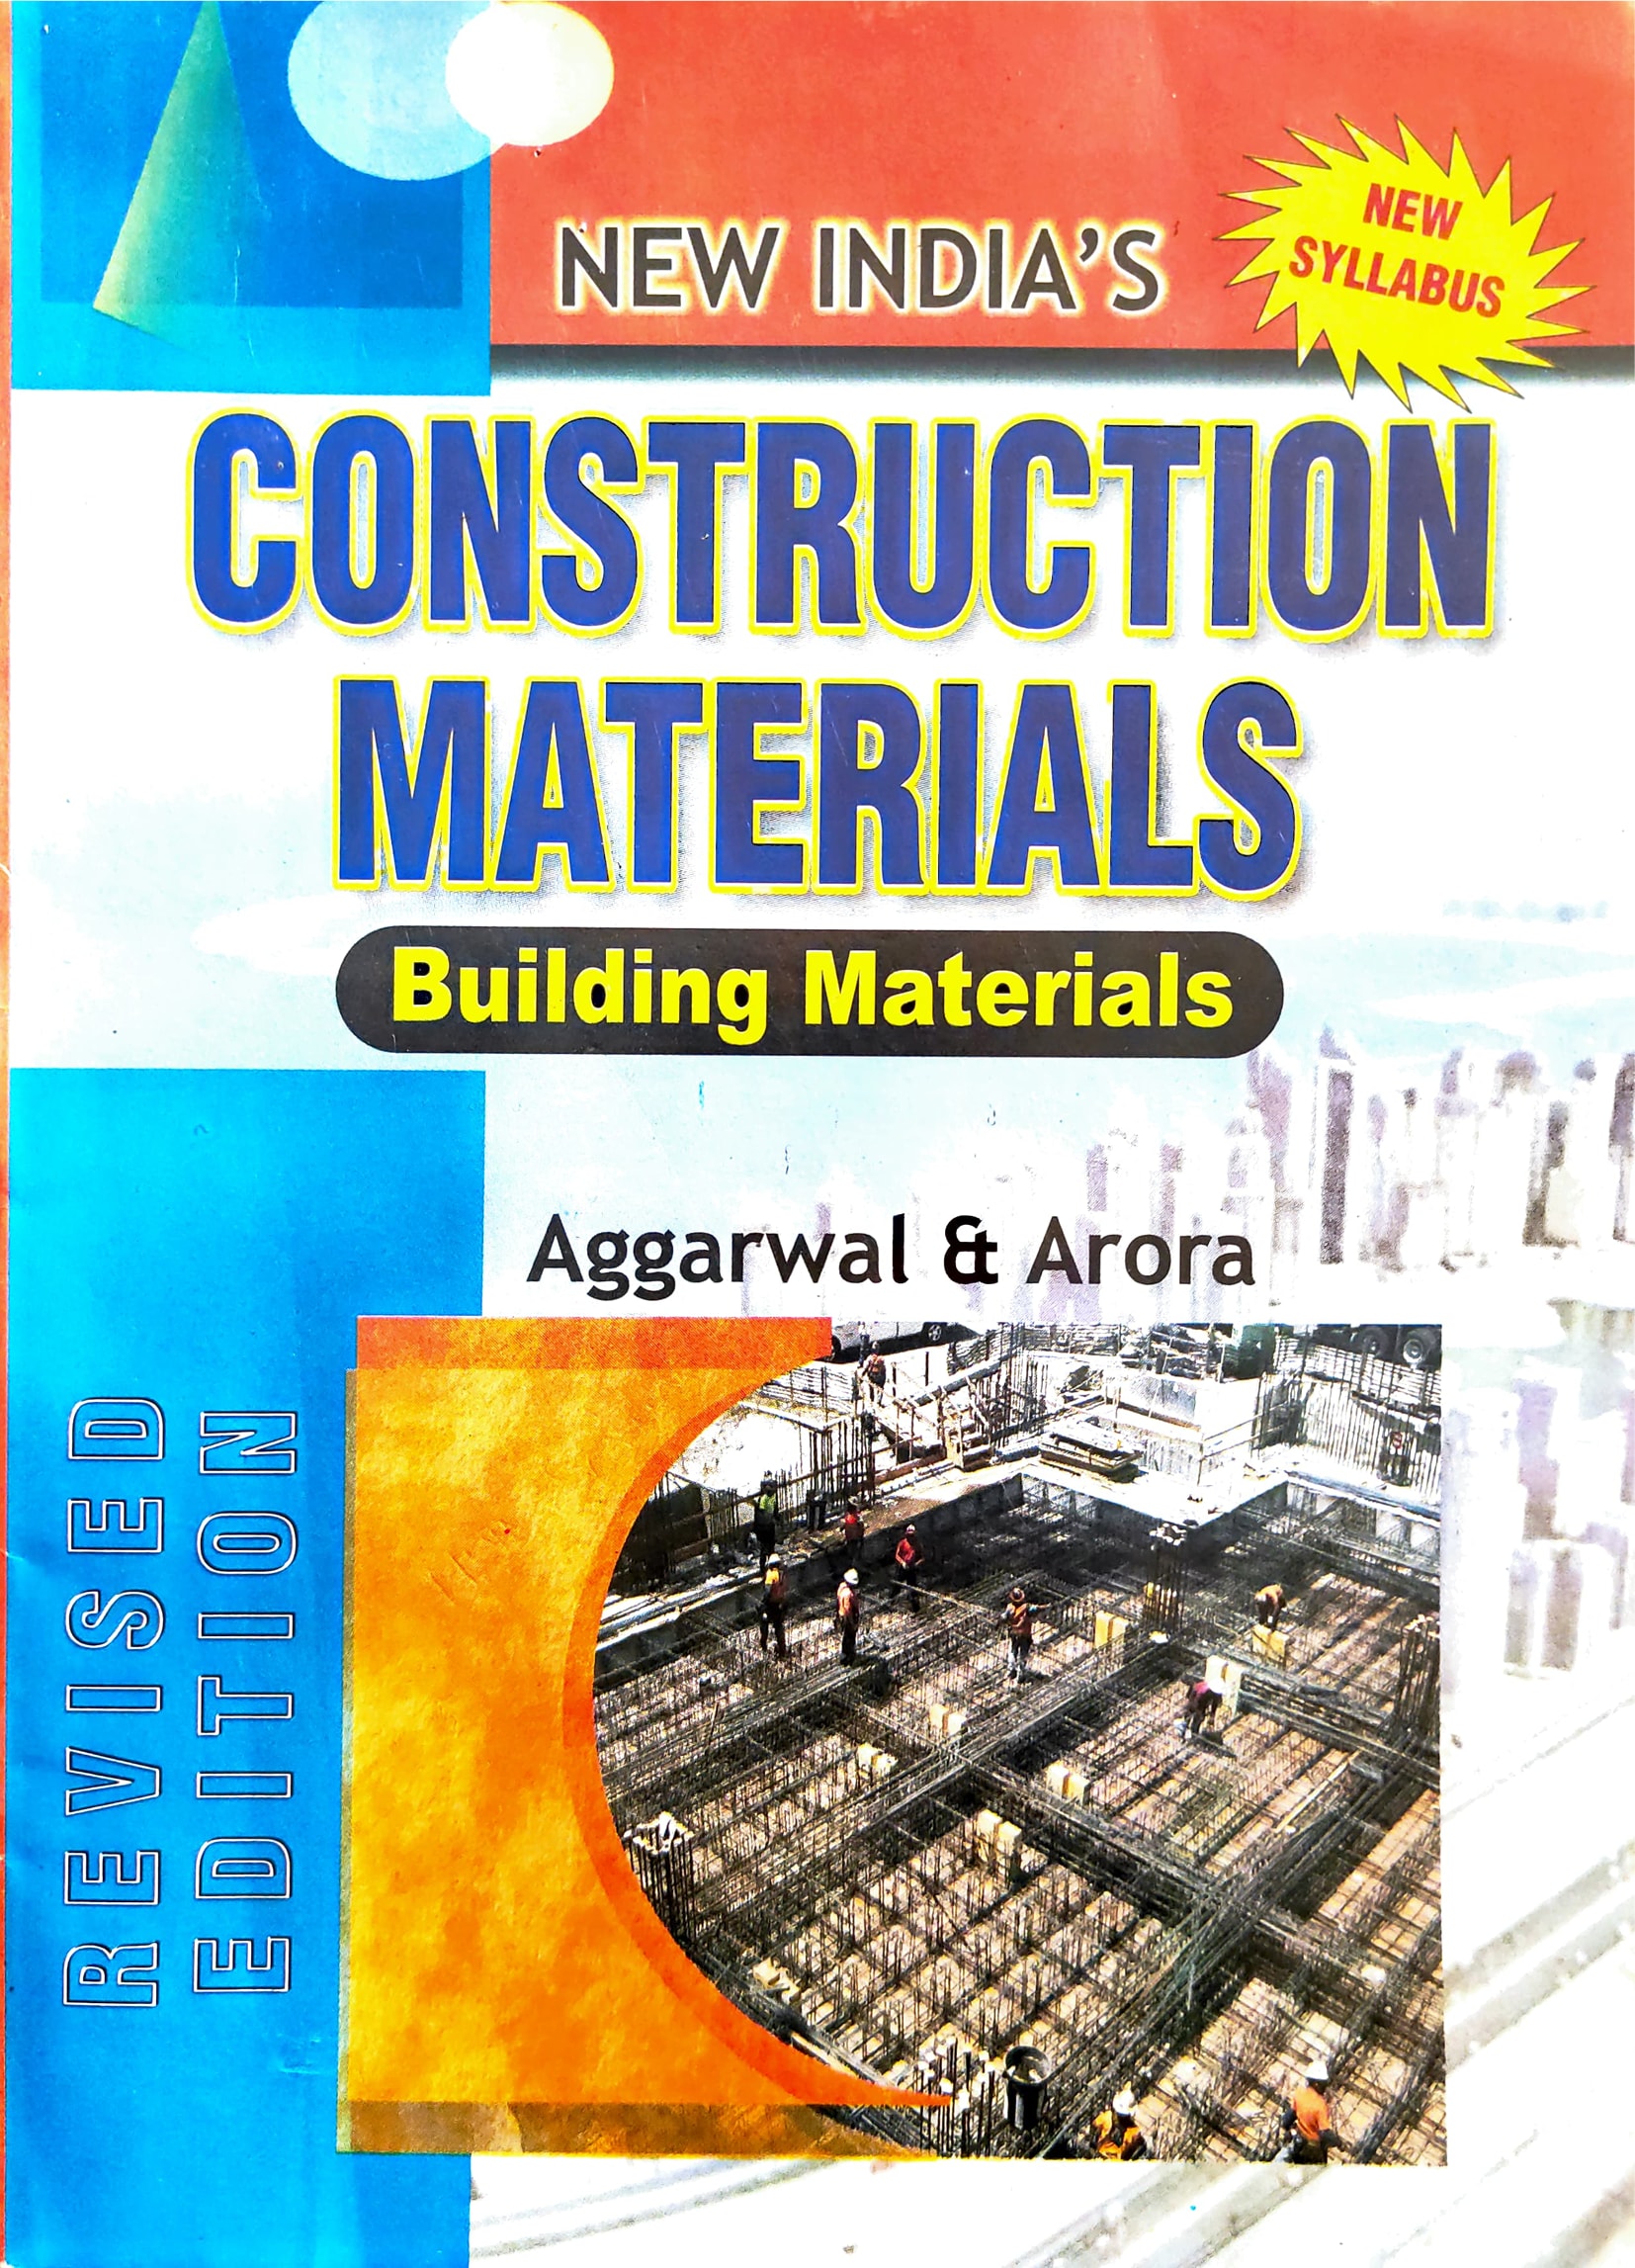 Construction materials & building materials book by Agarwal & Arora